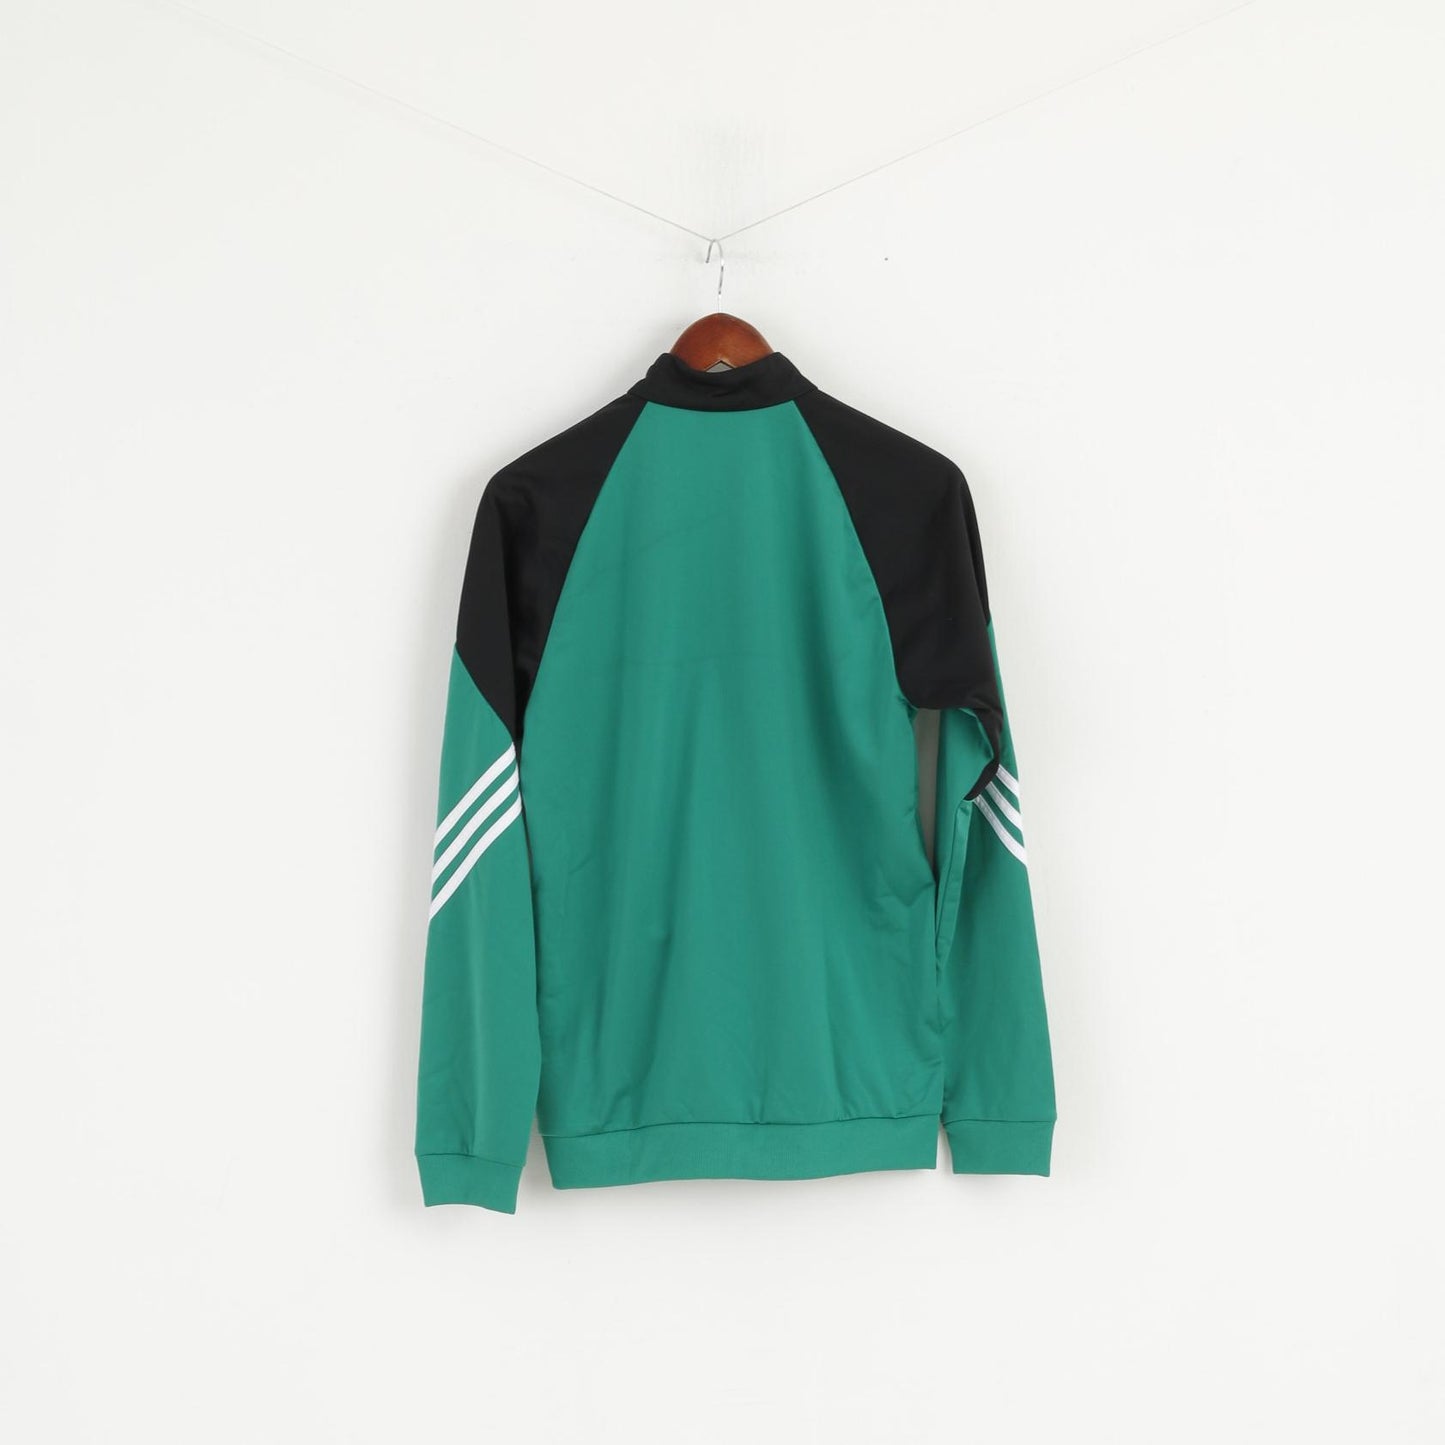 Adidas Men S Sweatshirt Green Shiny Slim Fit Full Zipper Classic Track Top